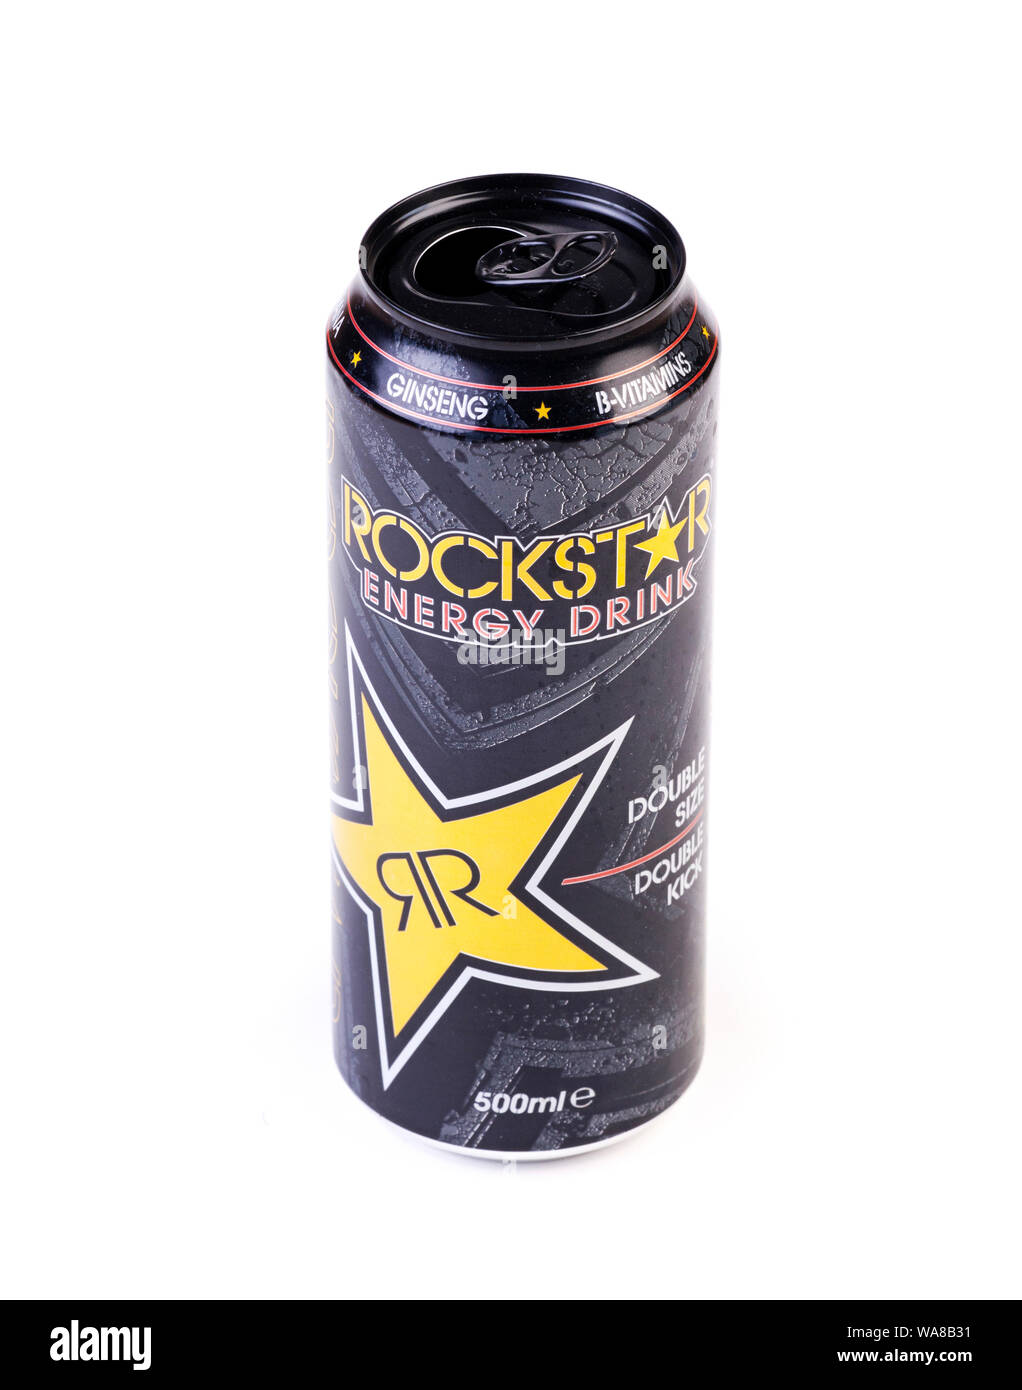 Rockstar energy drink Stock Photo